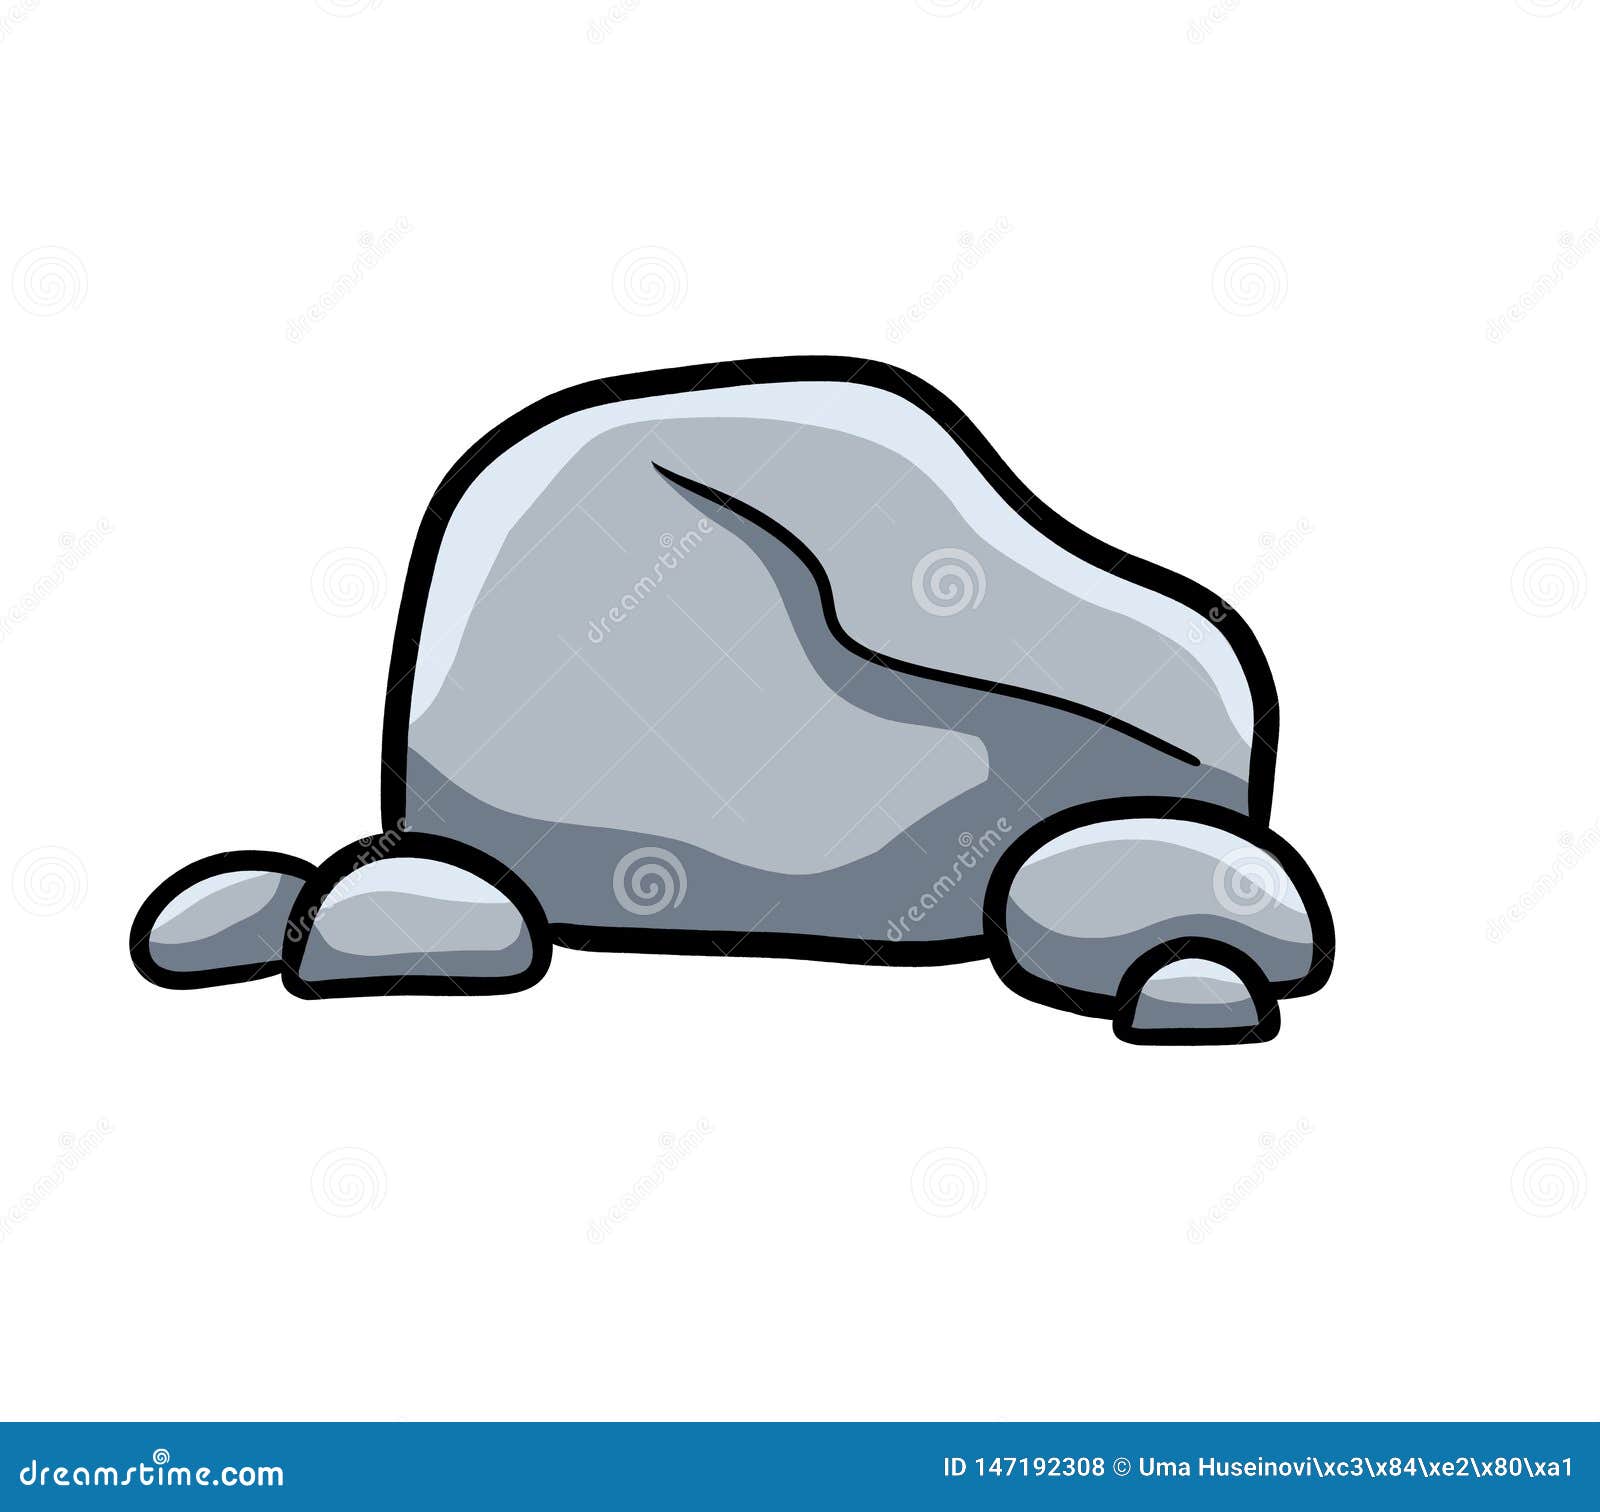 Cartoon Rock And Pebbles Stock Illustration. Illustration Of Cracked -  147192308